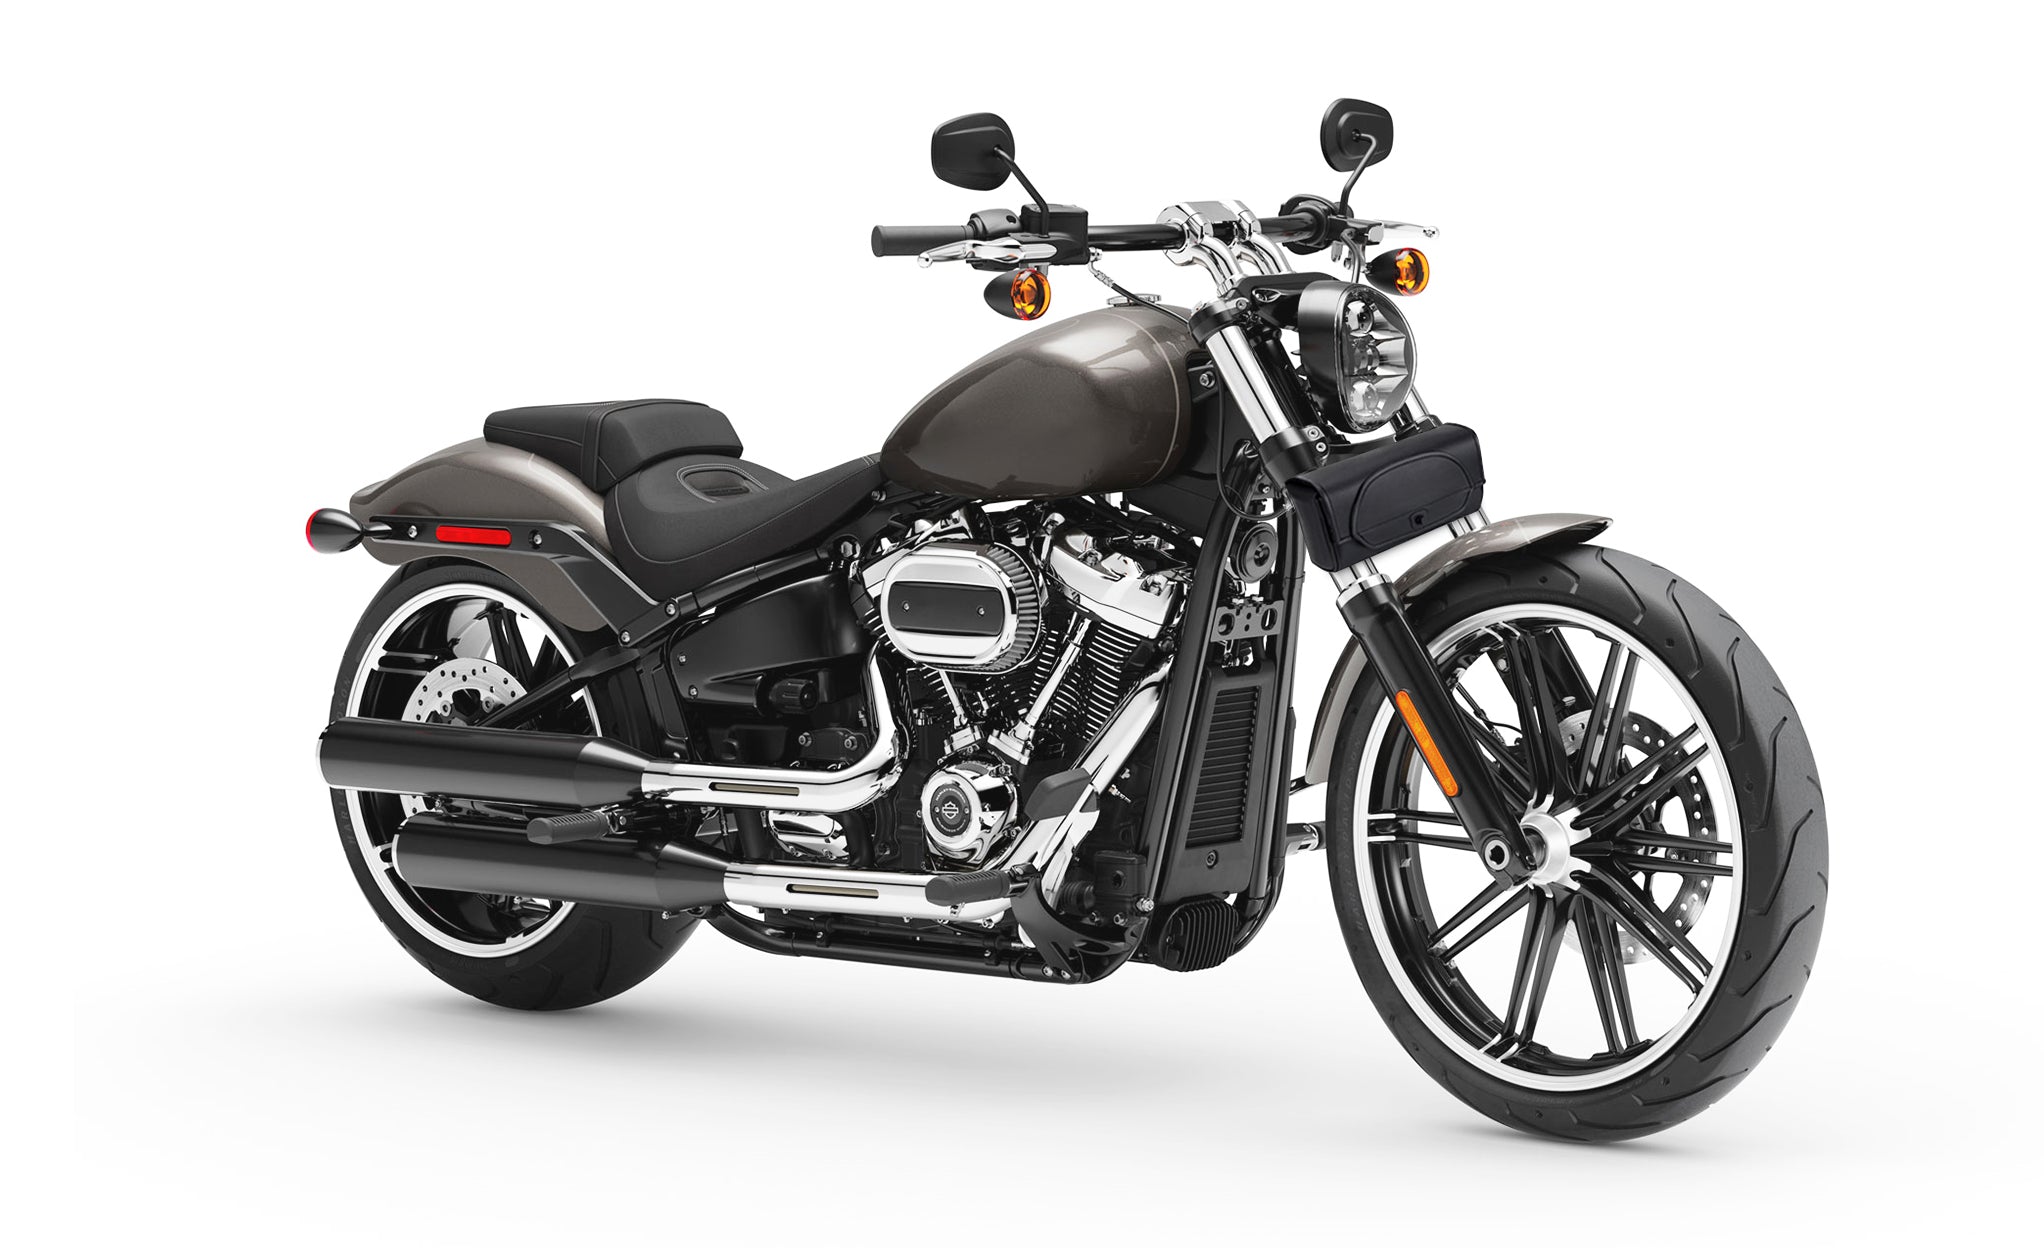 Viking Twist Warrior Leather Motorcycle Fork Bag for Harley Davidson Bag on Bike View @expand